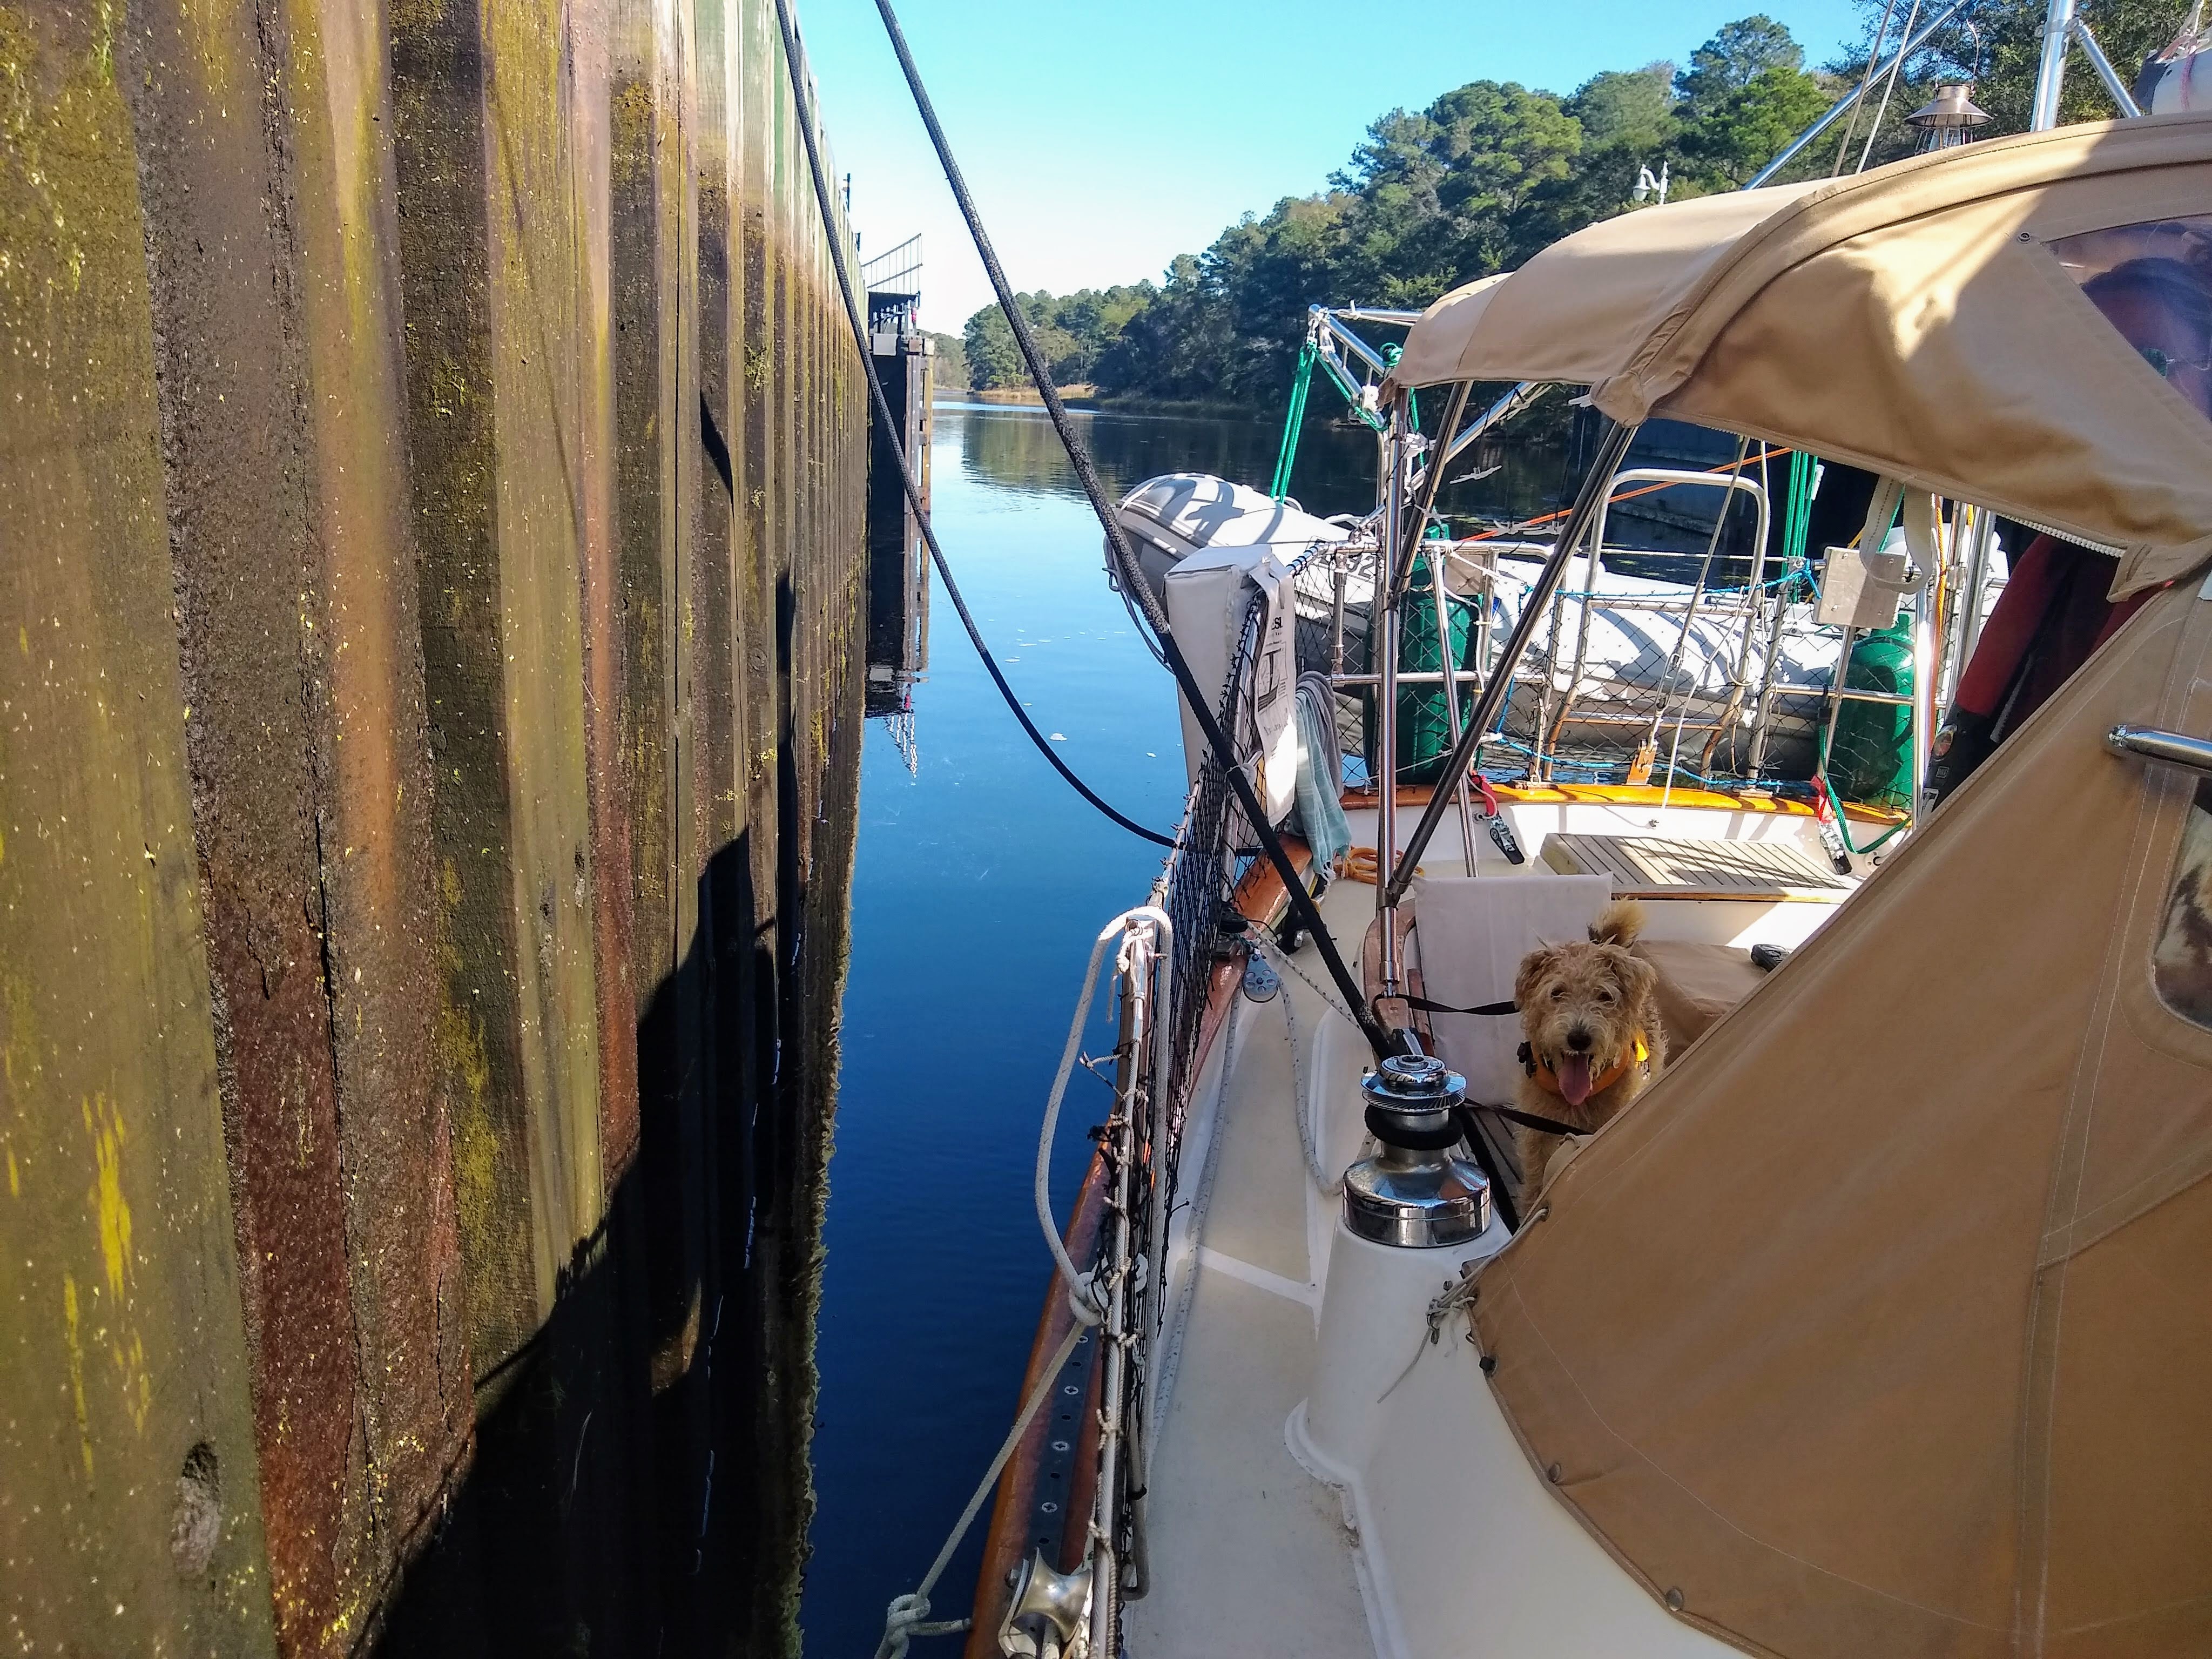 Boat Dog locks through a lock on the Dismal Swamp ICW